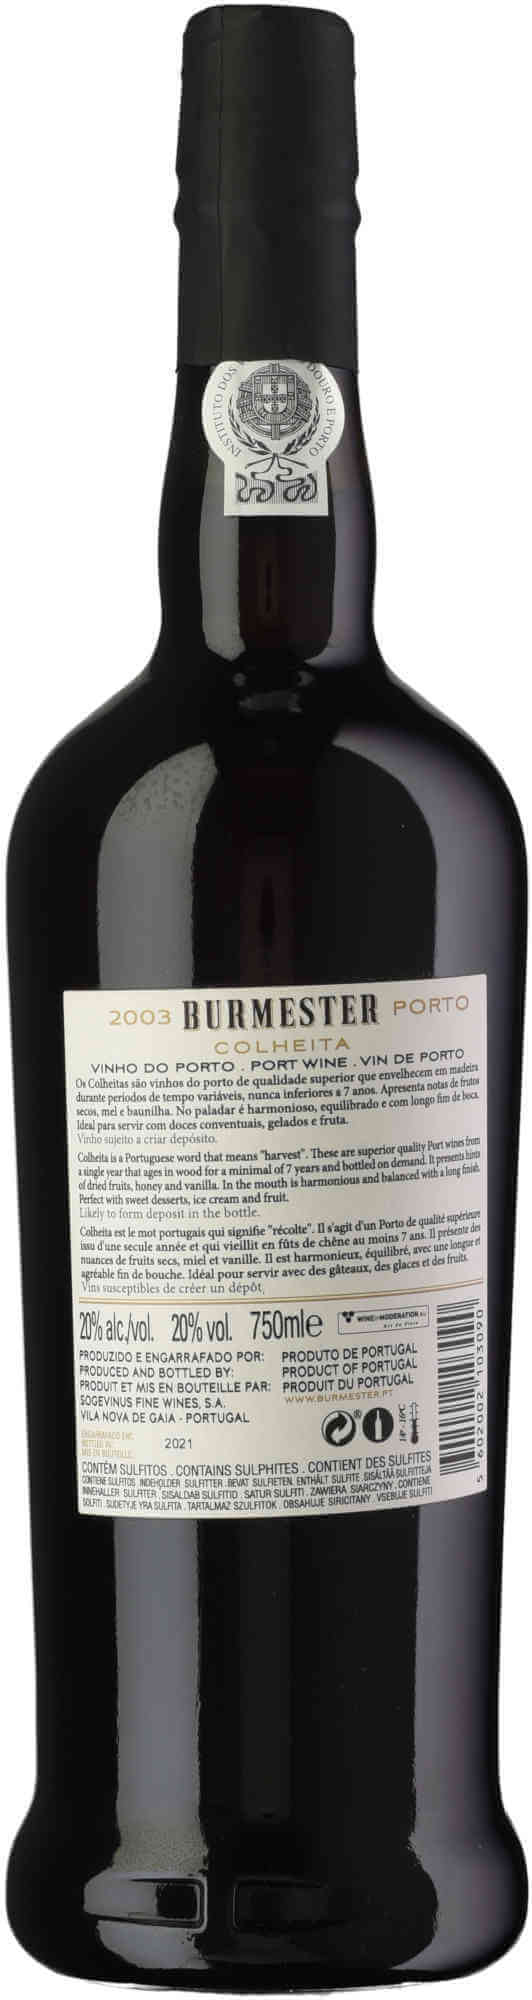 Burmester-Colheita-Port-2003-back